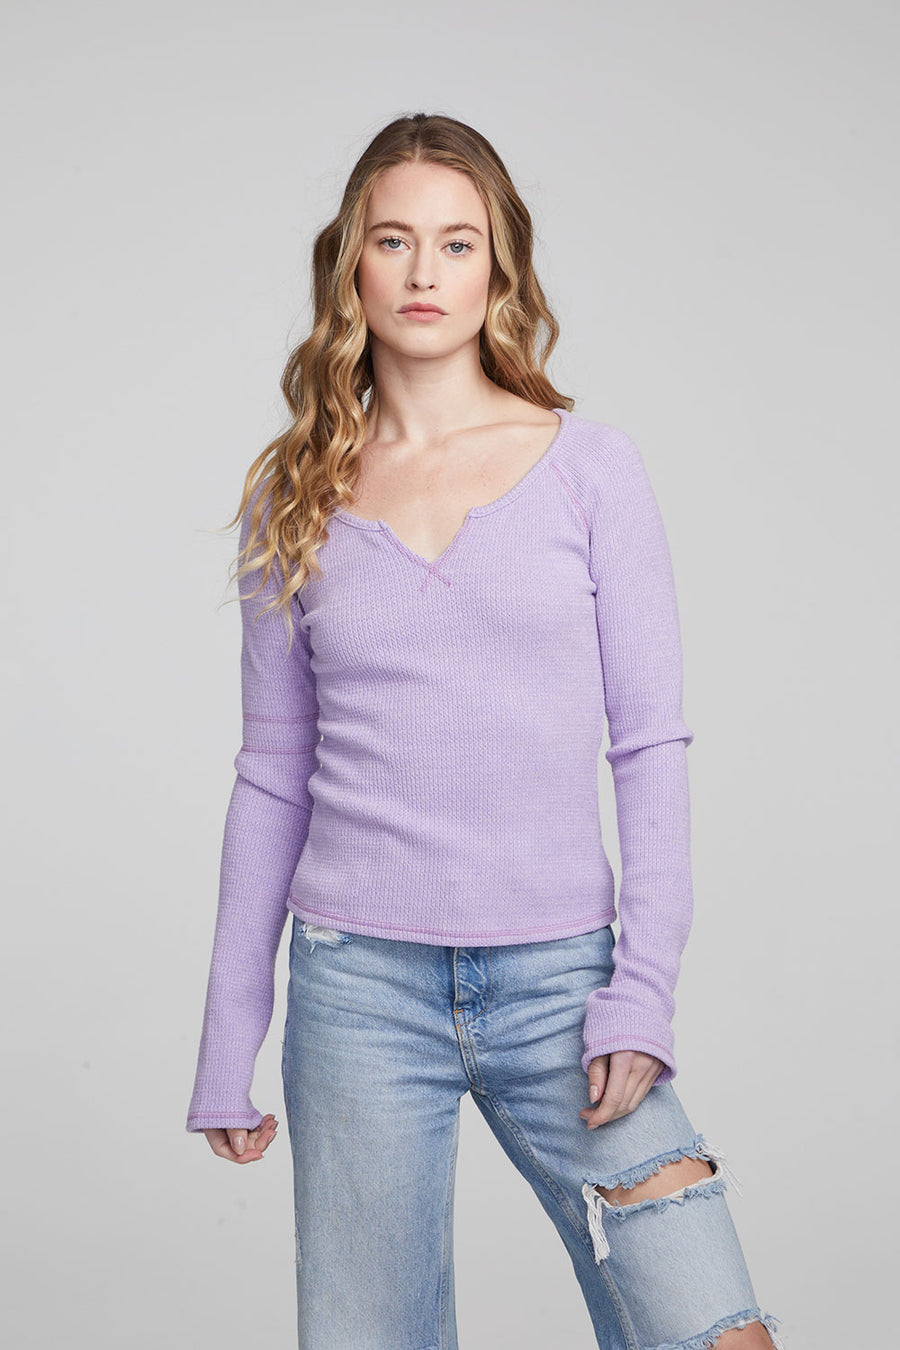 Cooper Digital Lavender Long Sleeve WOMENS chaserbrand